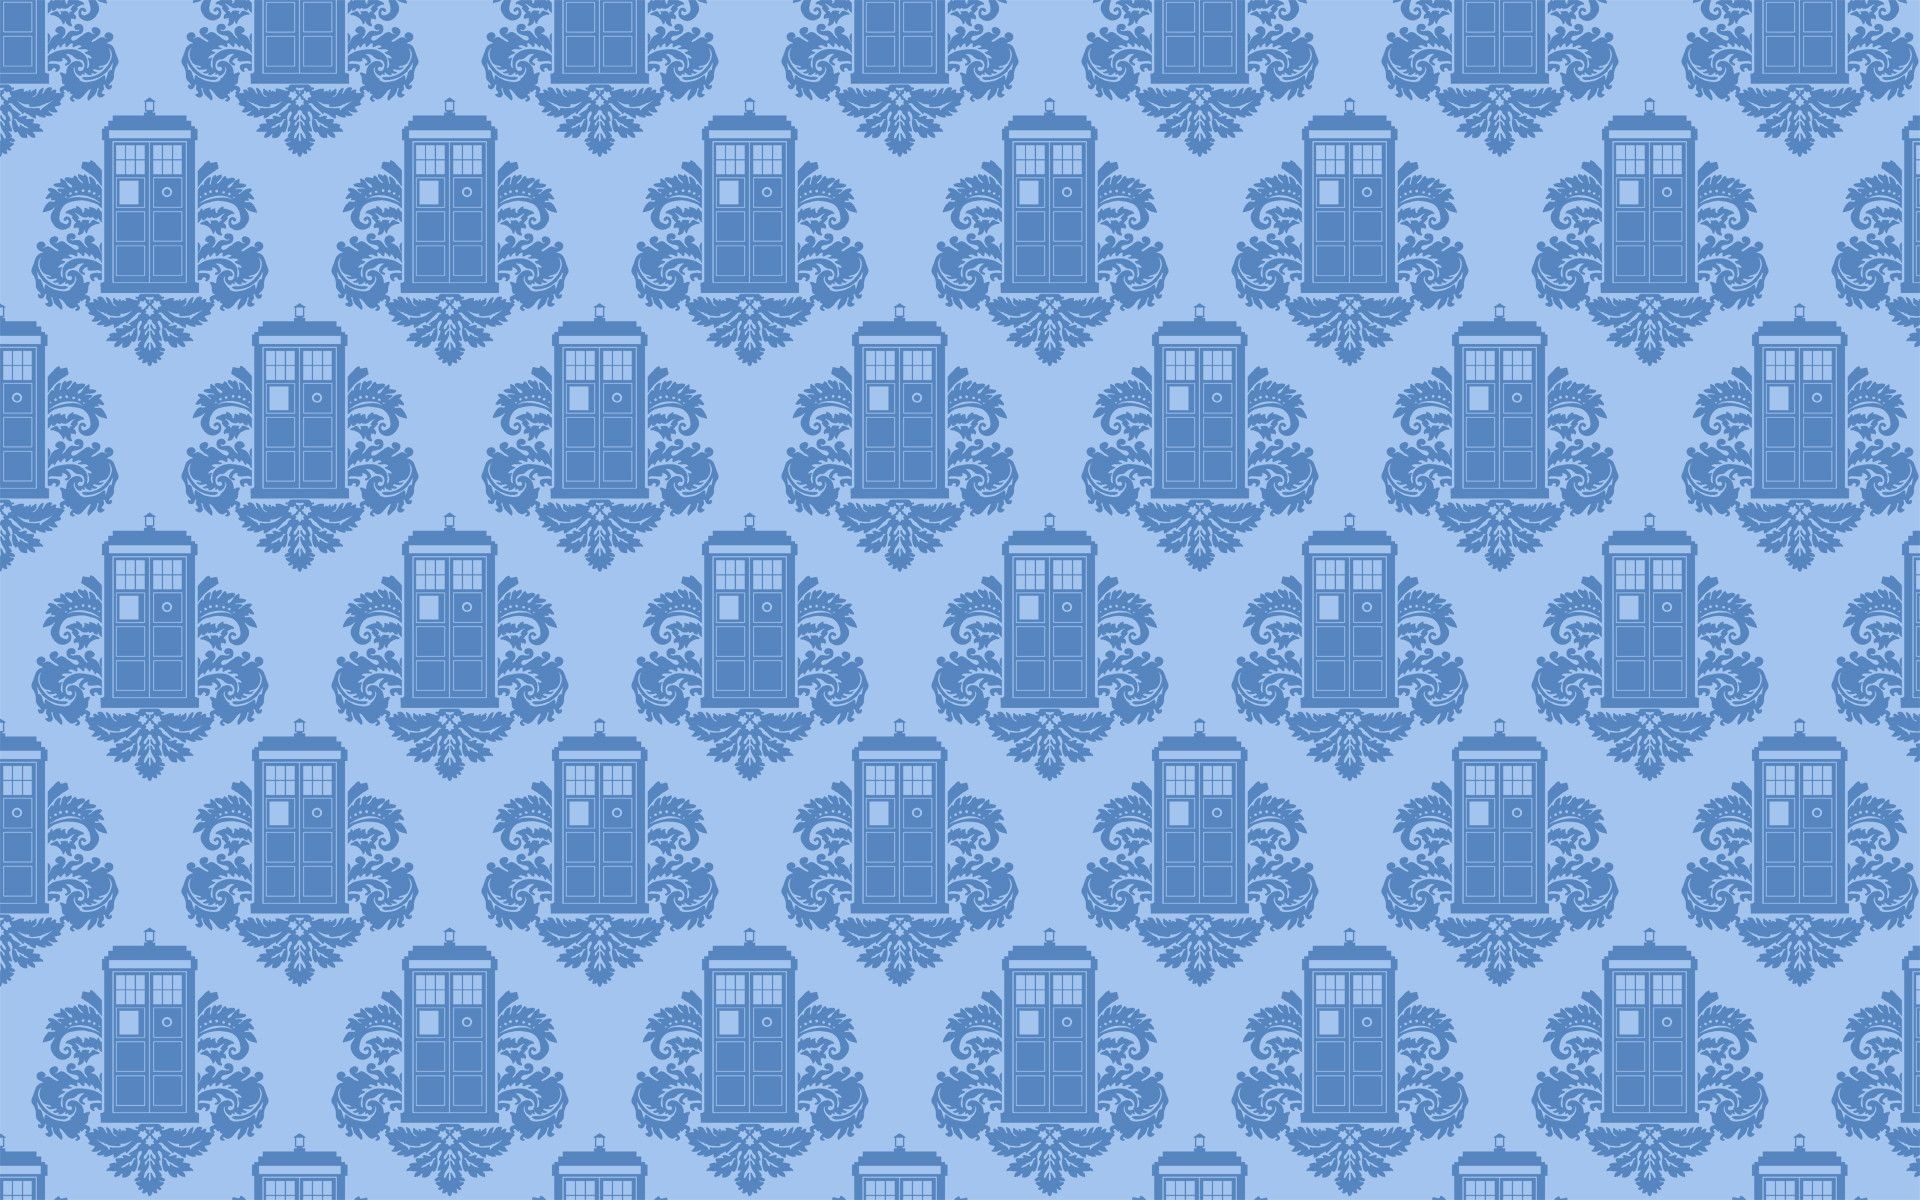 Doctor Who Tardis wallpaper – 881387